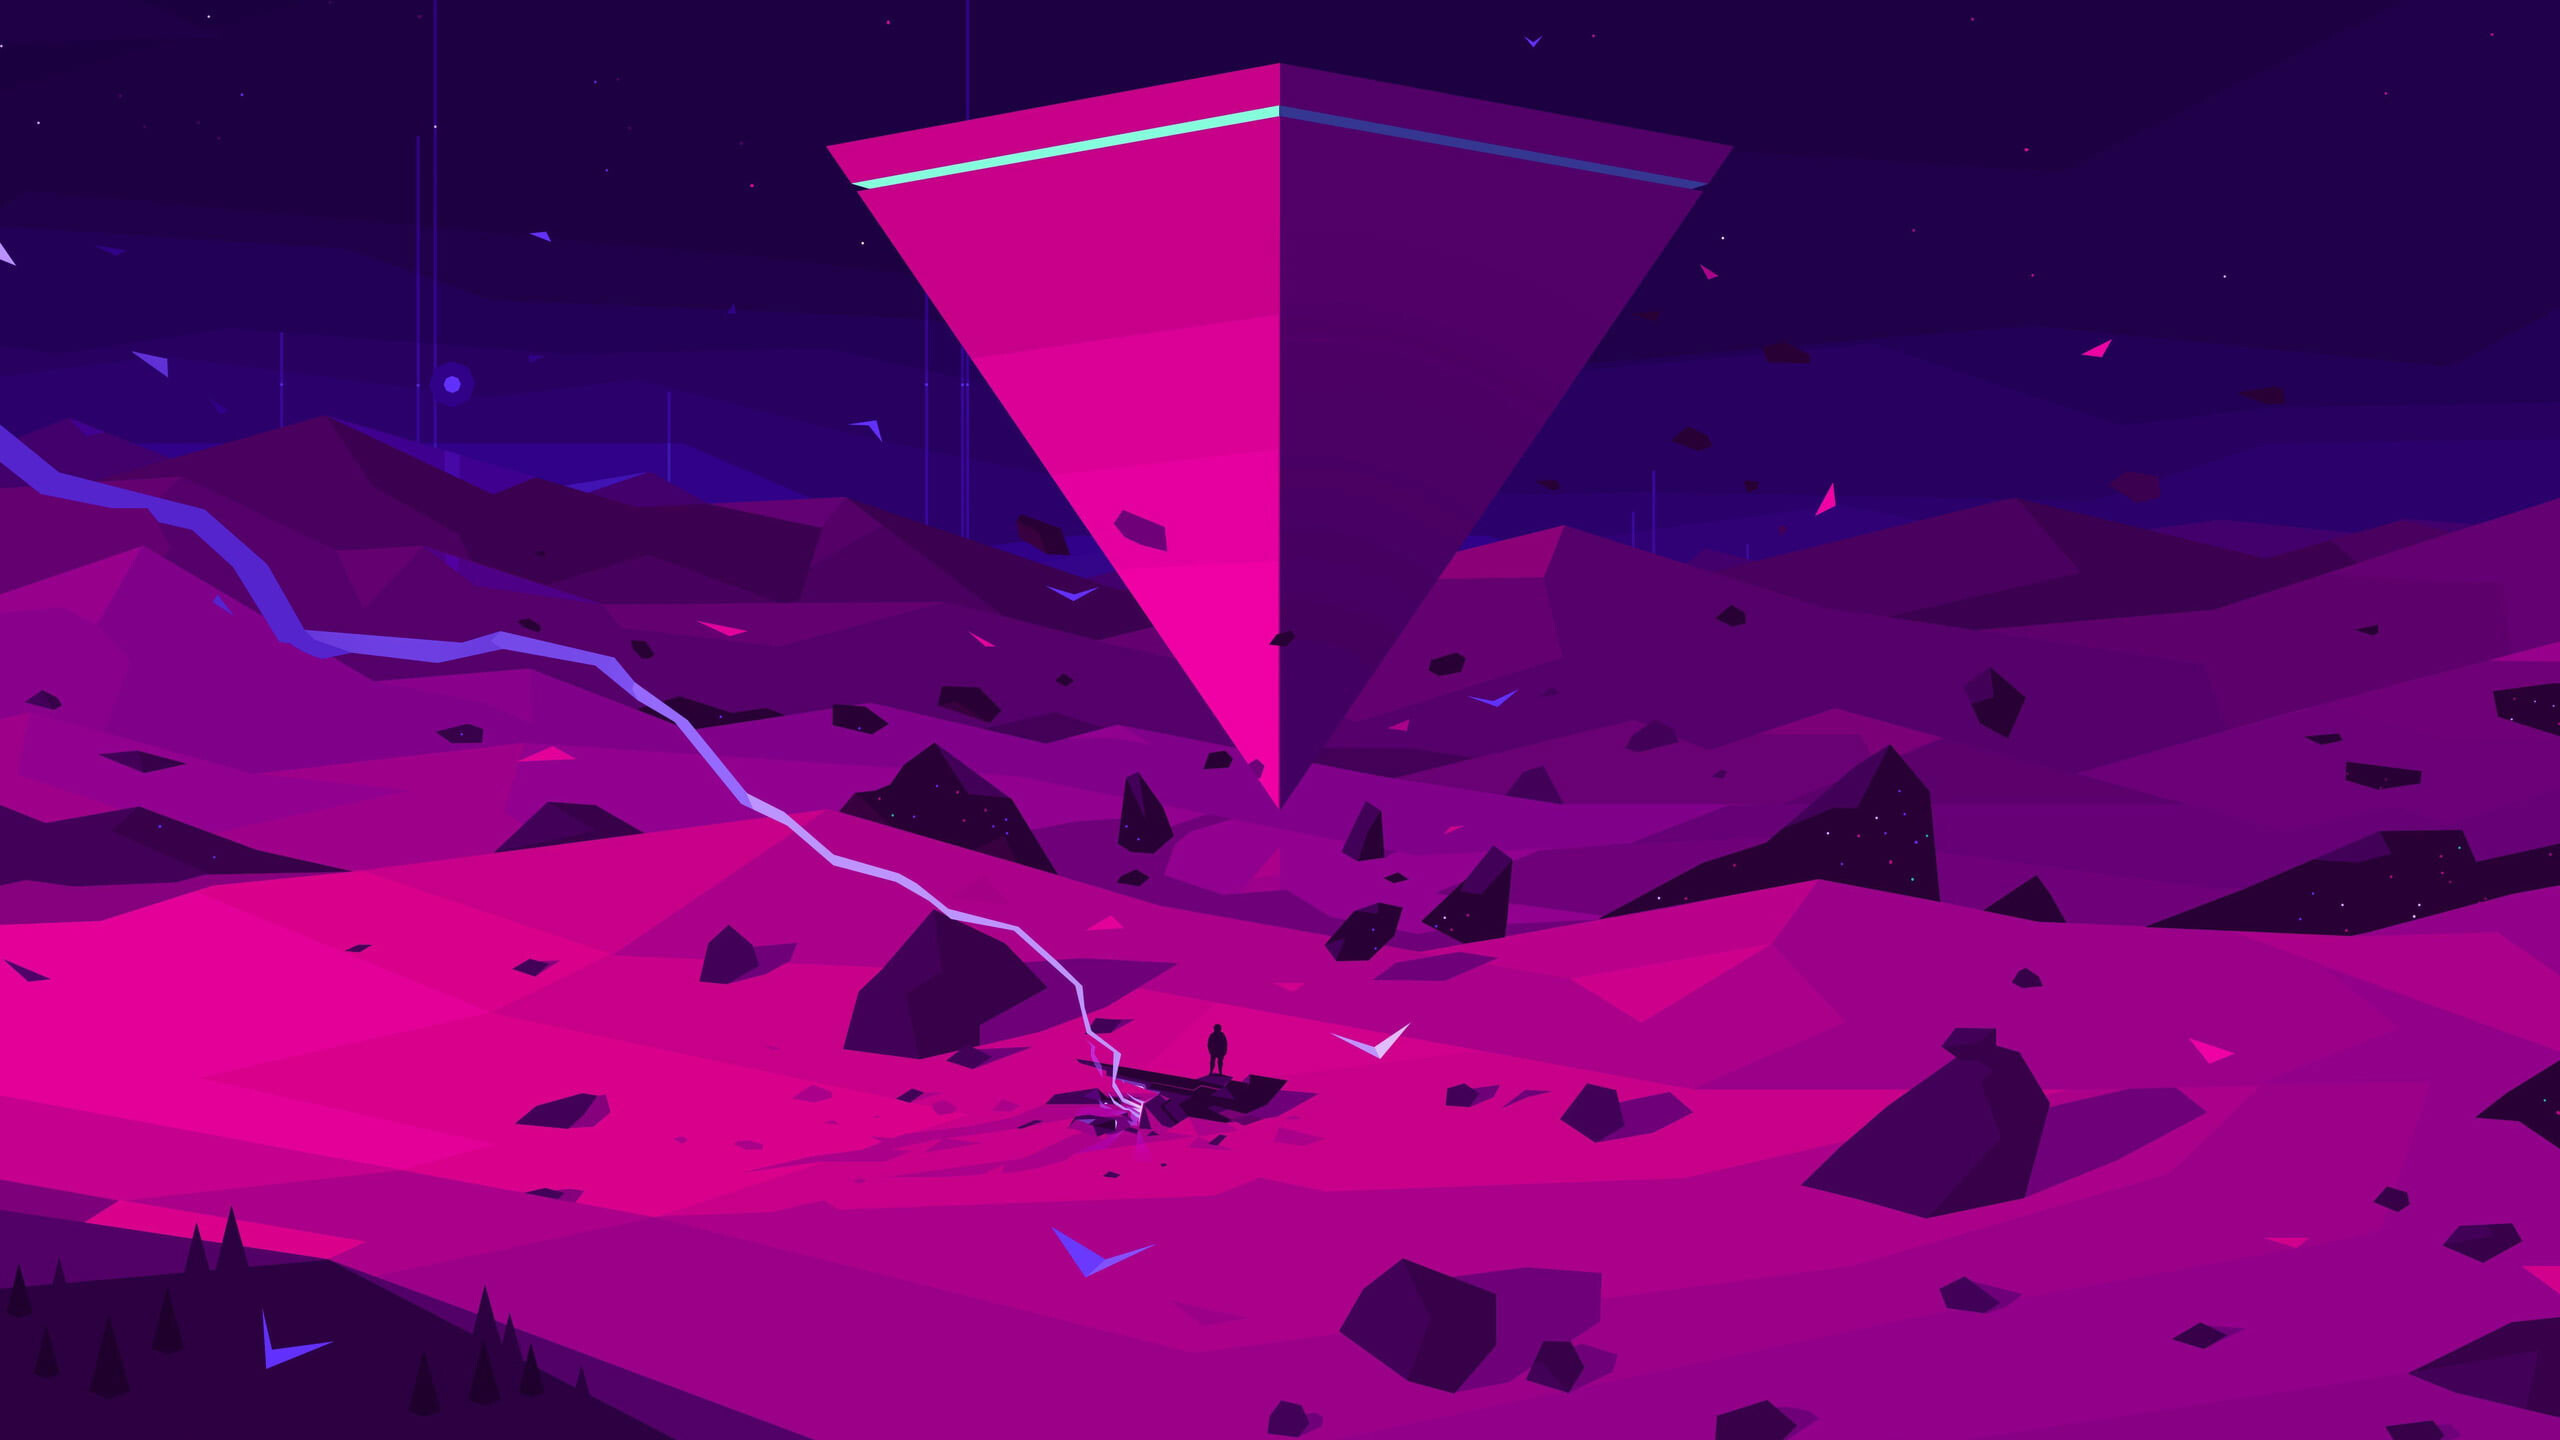 Triangle: Digital Art, Artwork, Pink, Purple, Space, Wedge. 2560x1440 HD Background.